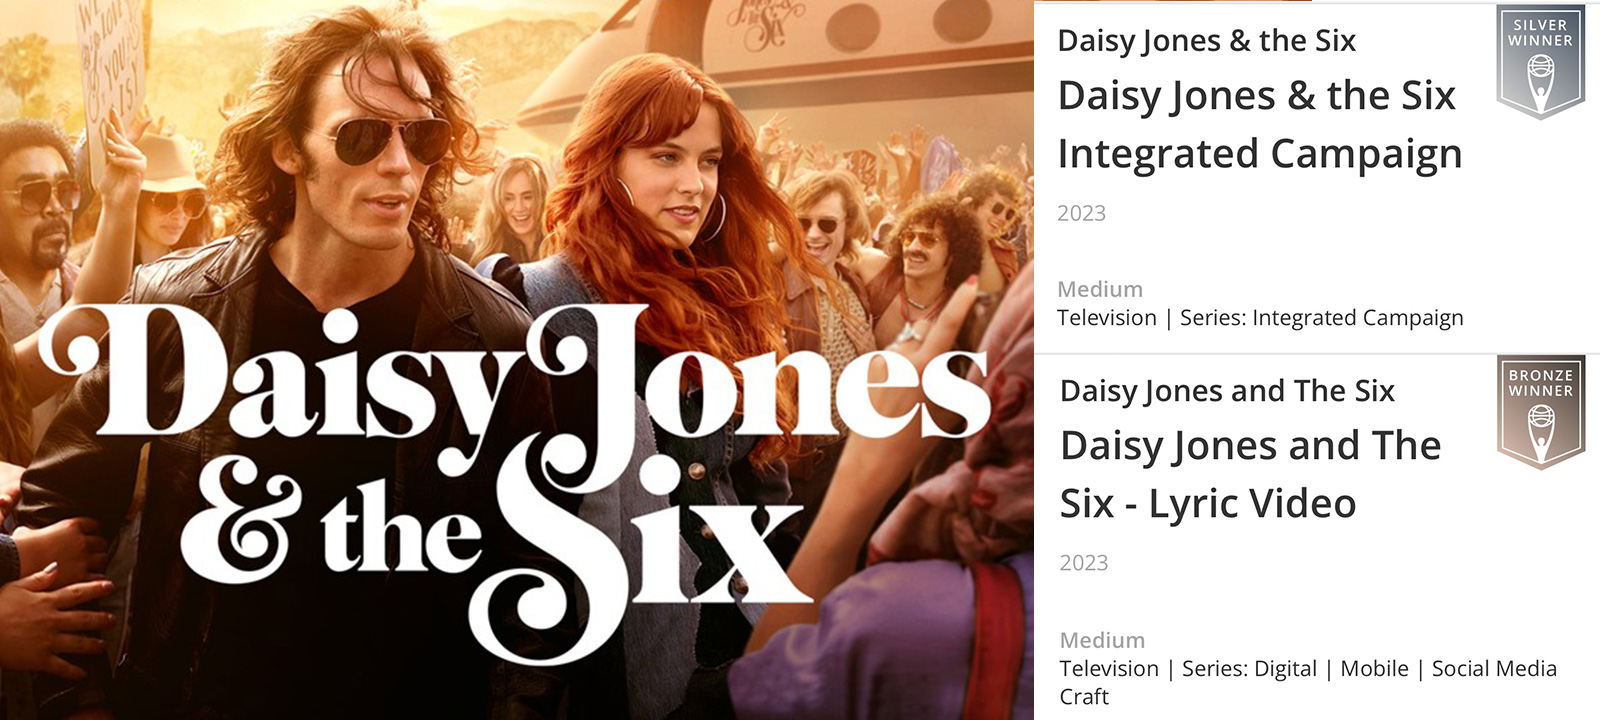 Daisy Jones and the Six social campaign